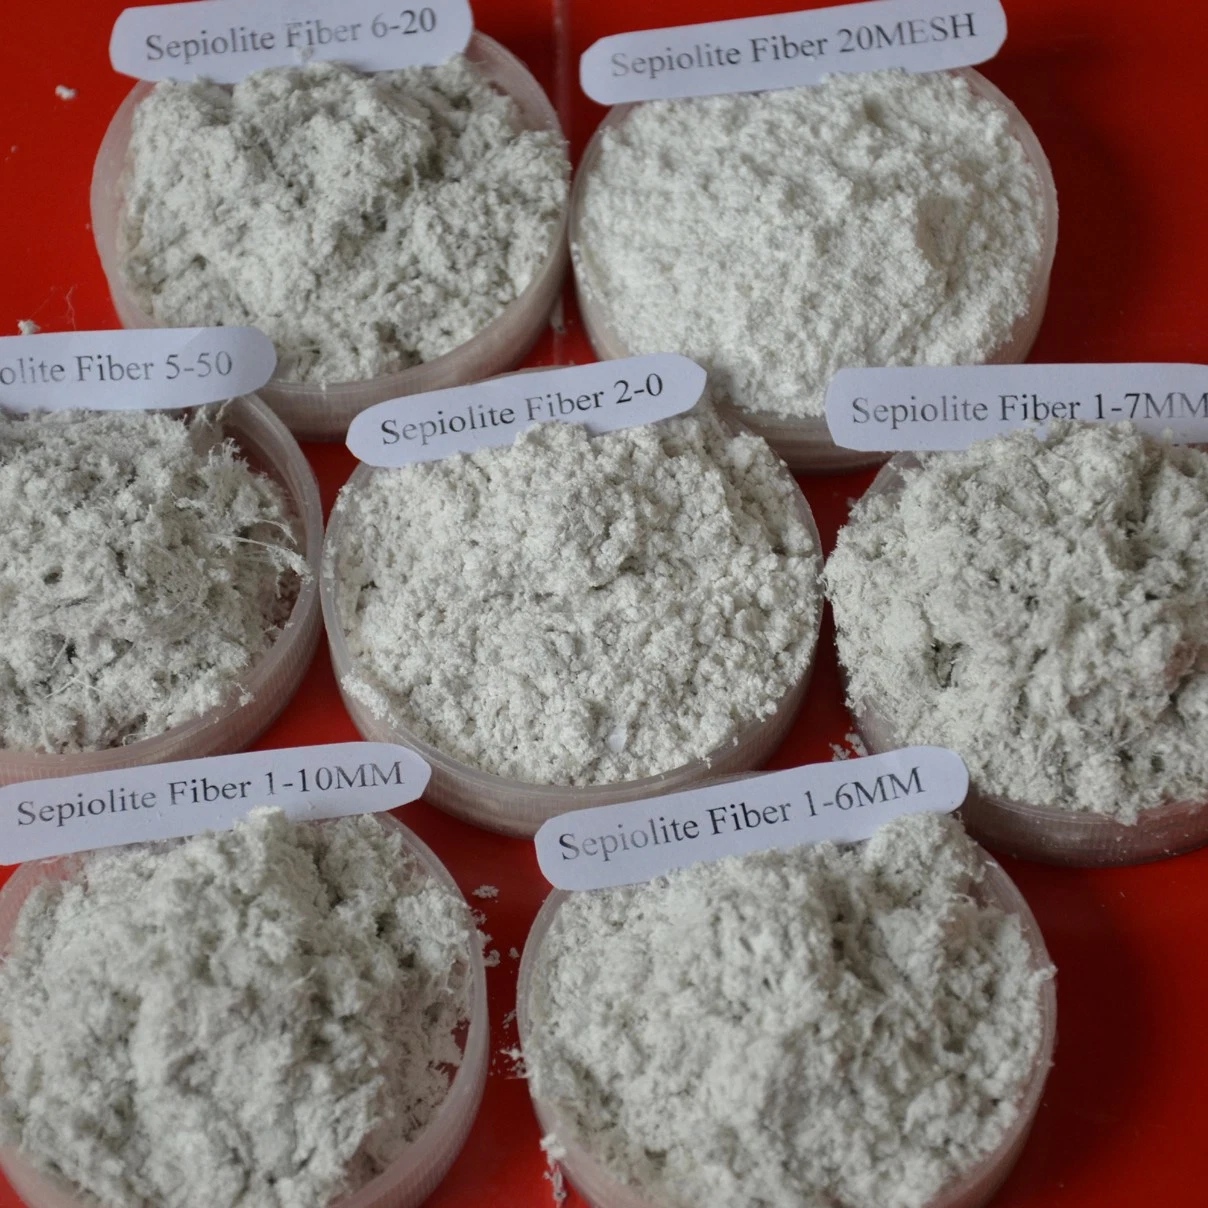 Factory Professional Supplier Sepiolite Powder Sepiolite Fibe for Brake Pads Pesticides Fertilizers Rubber Products